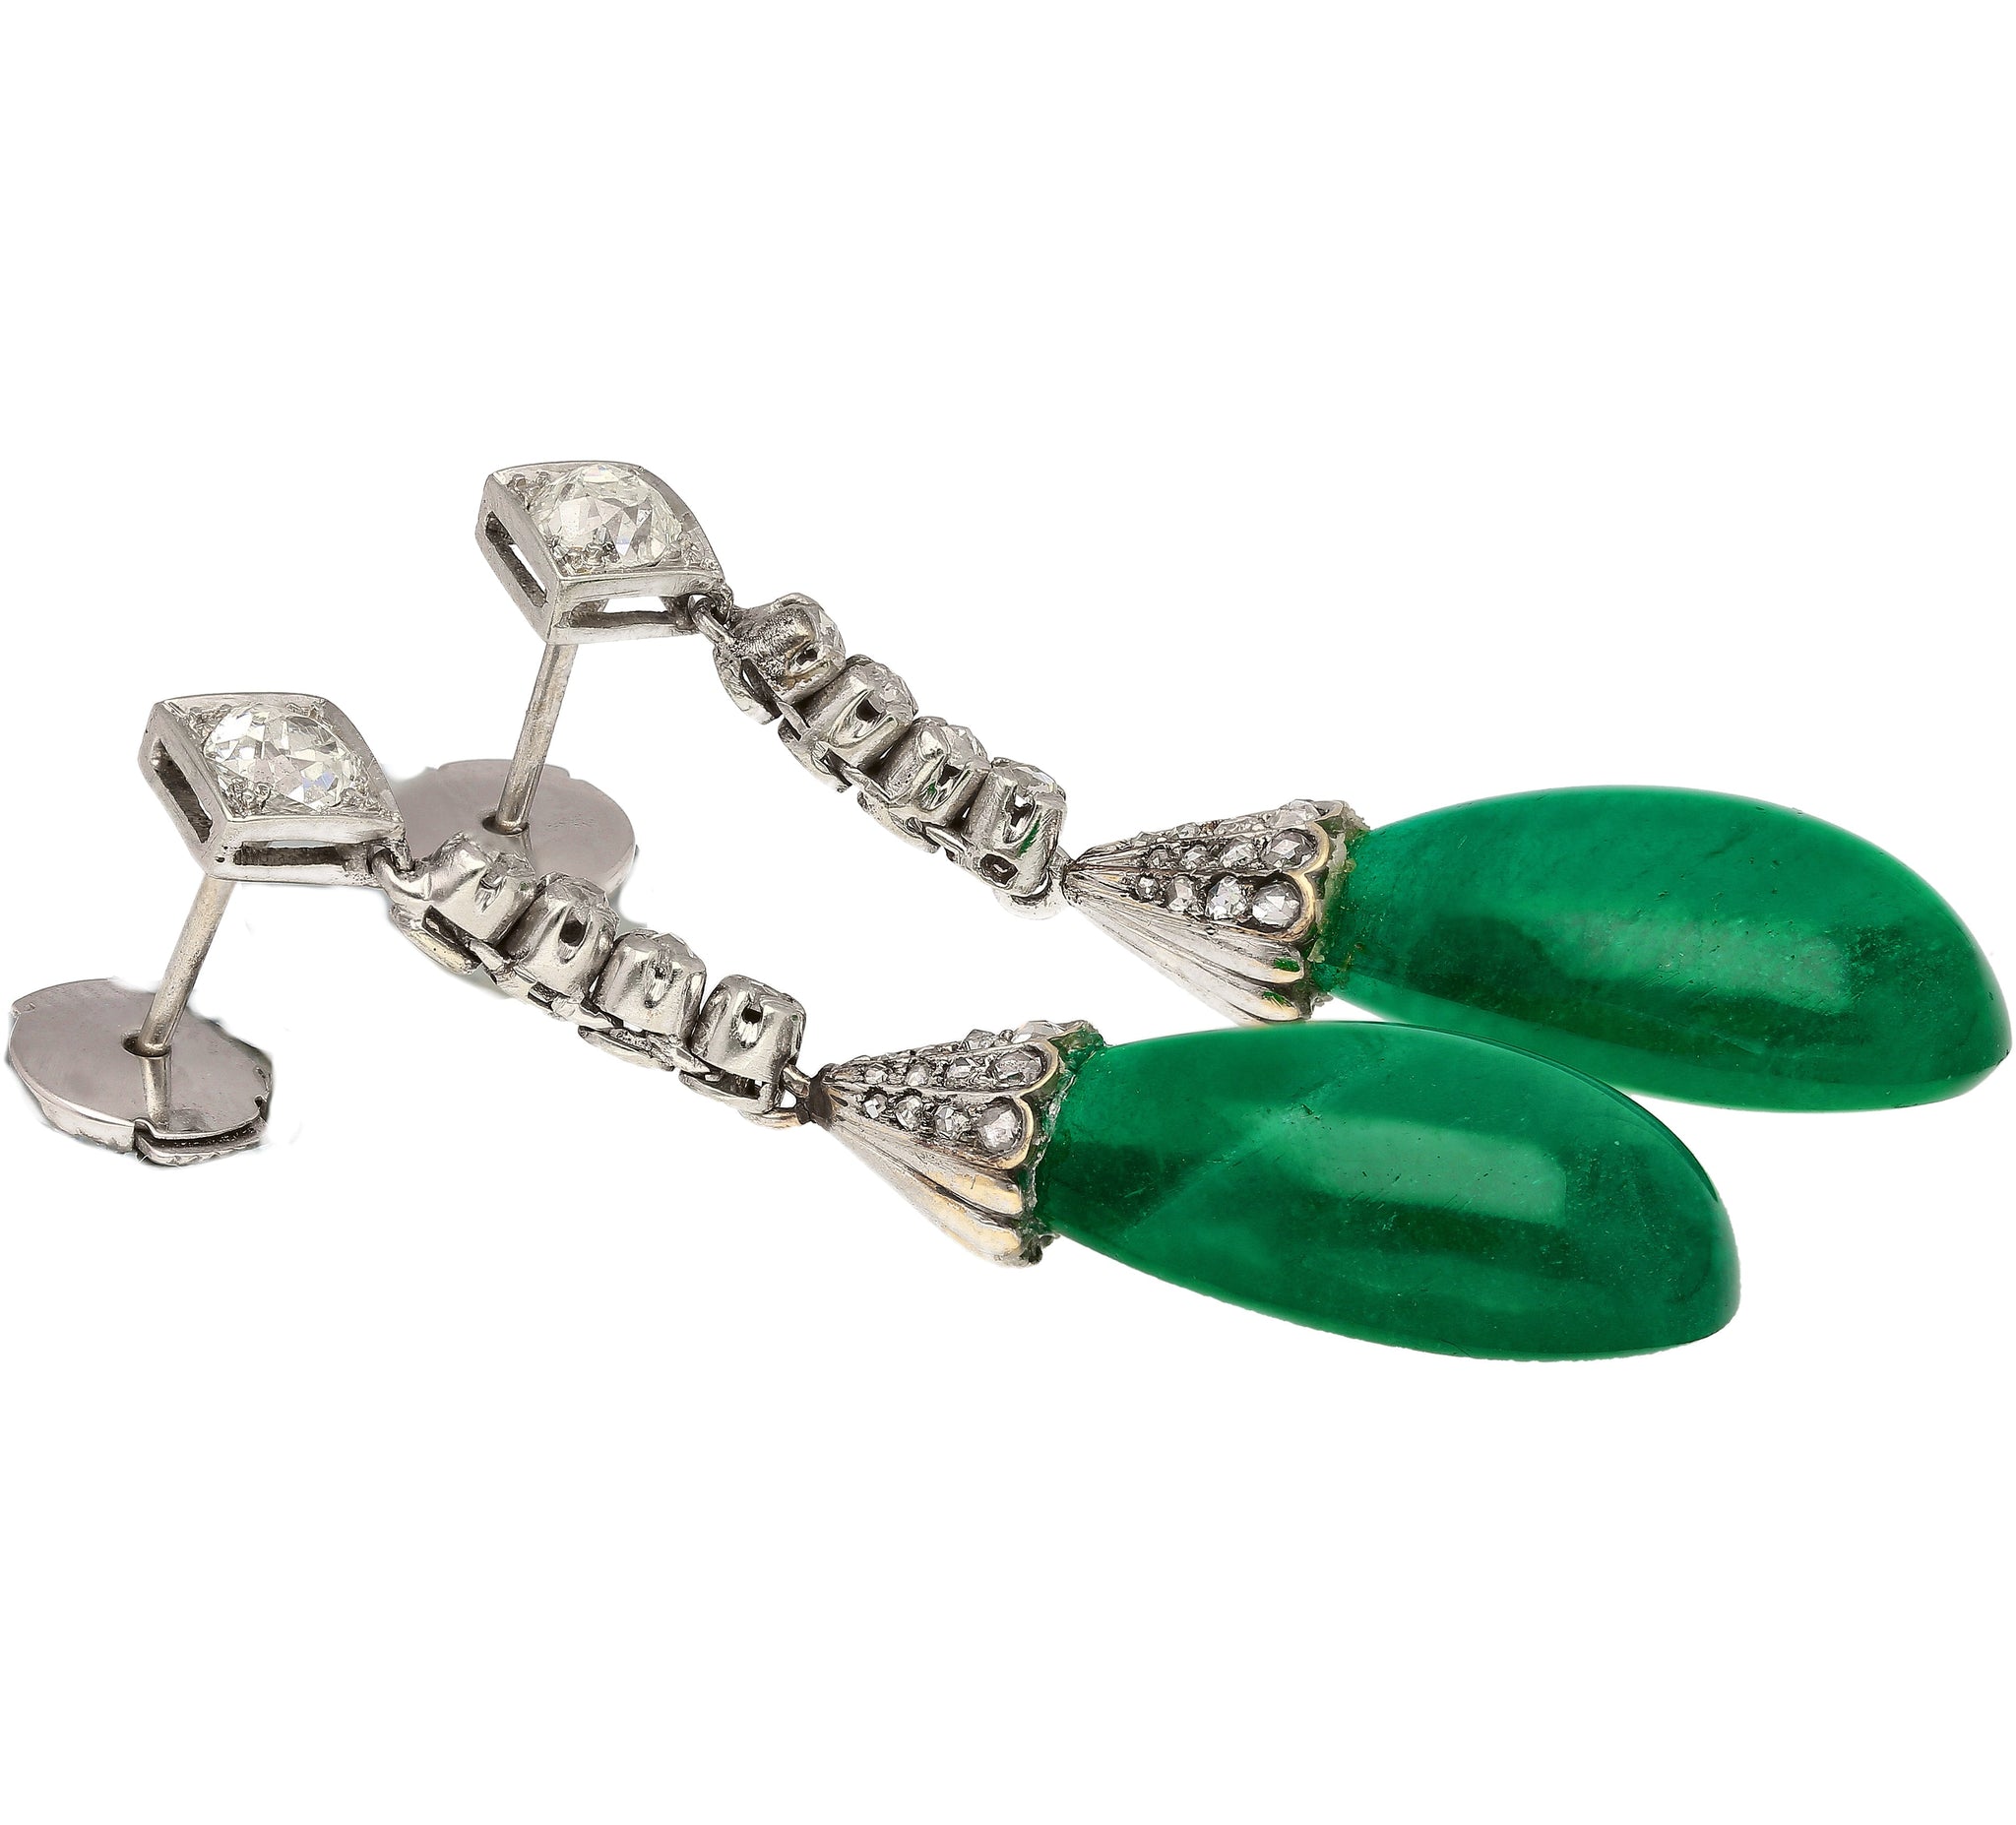 Art Deco Era 21 Carat Cabochon Pear Shape Emerald Drop Earrings | Circa 1940